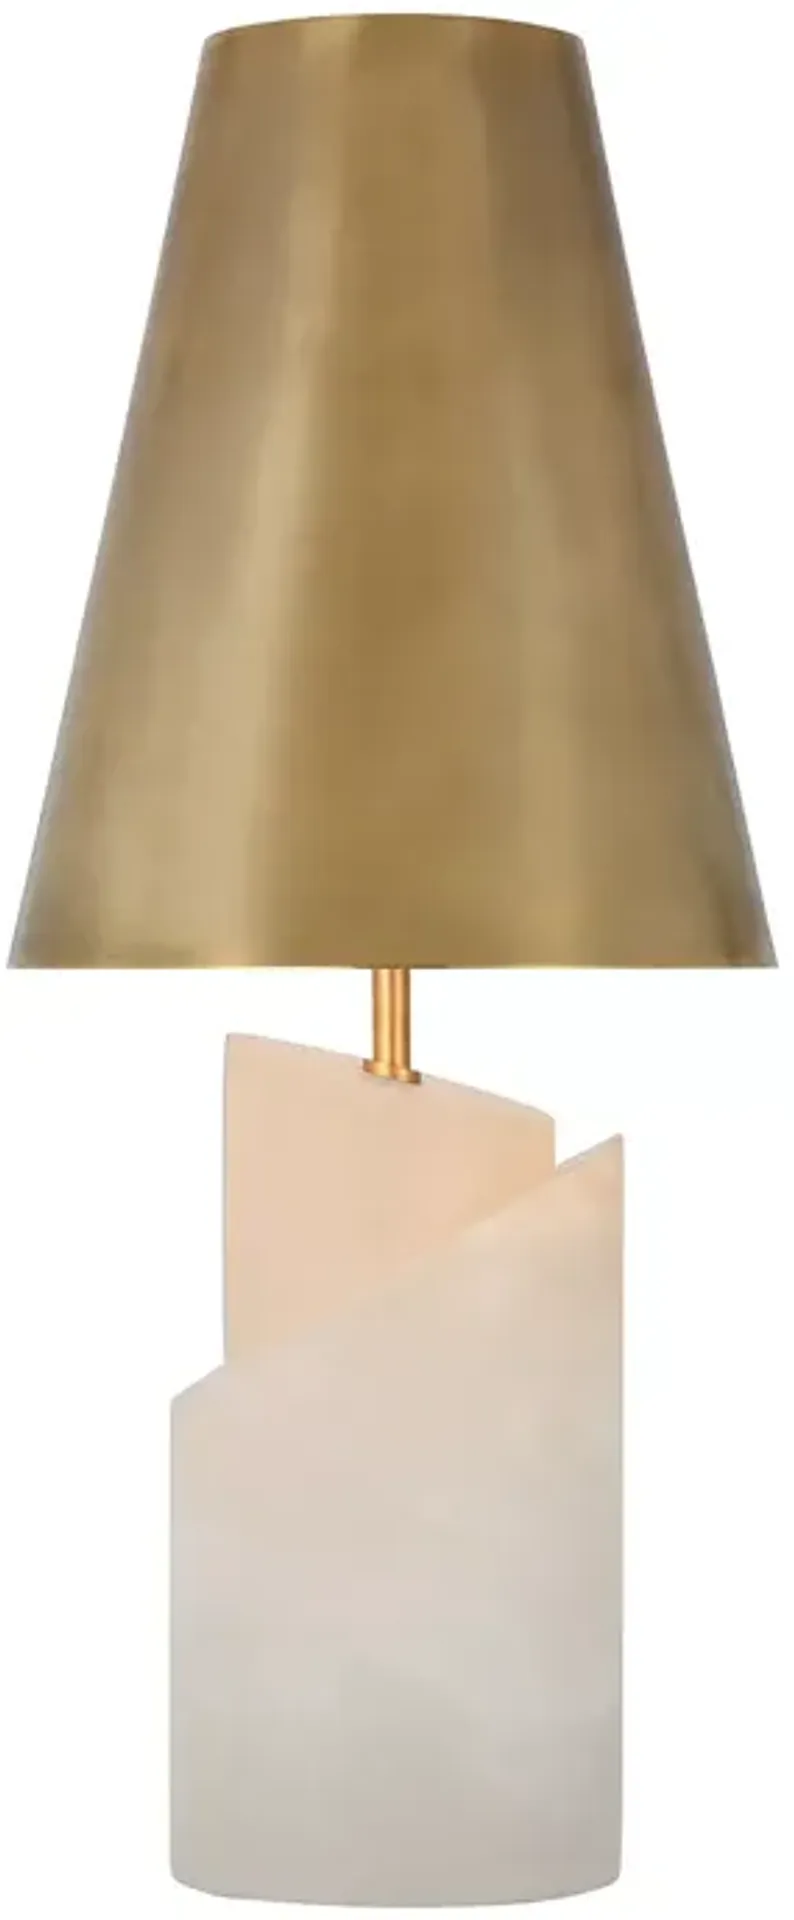 Kelly Wearstler Topanga Medium Table Lamp